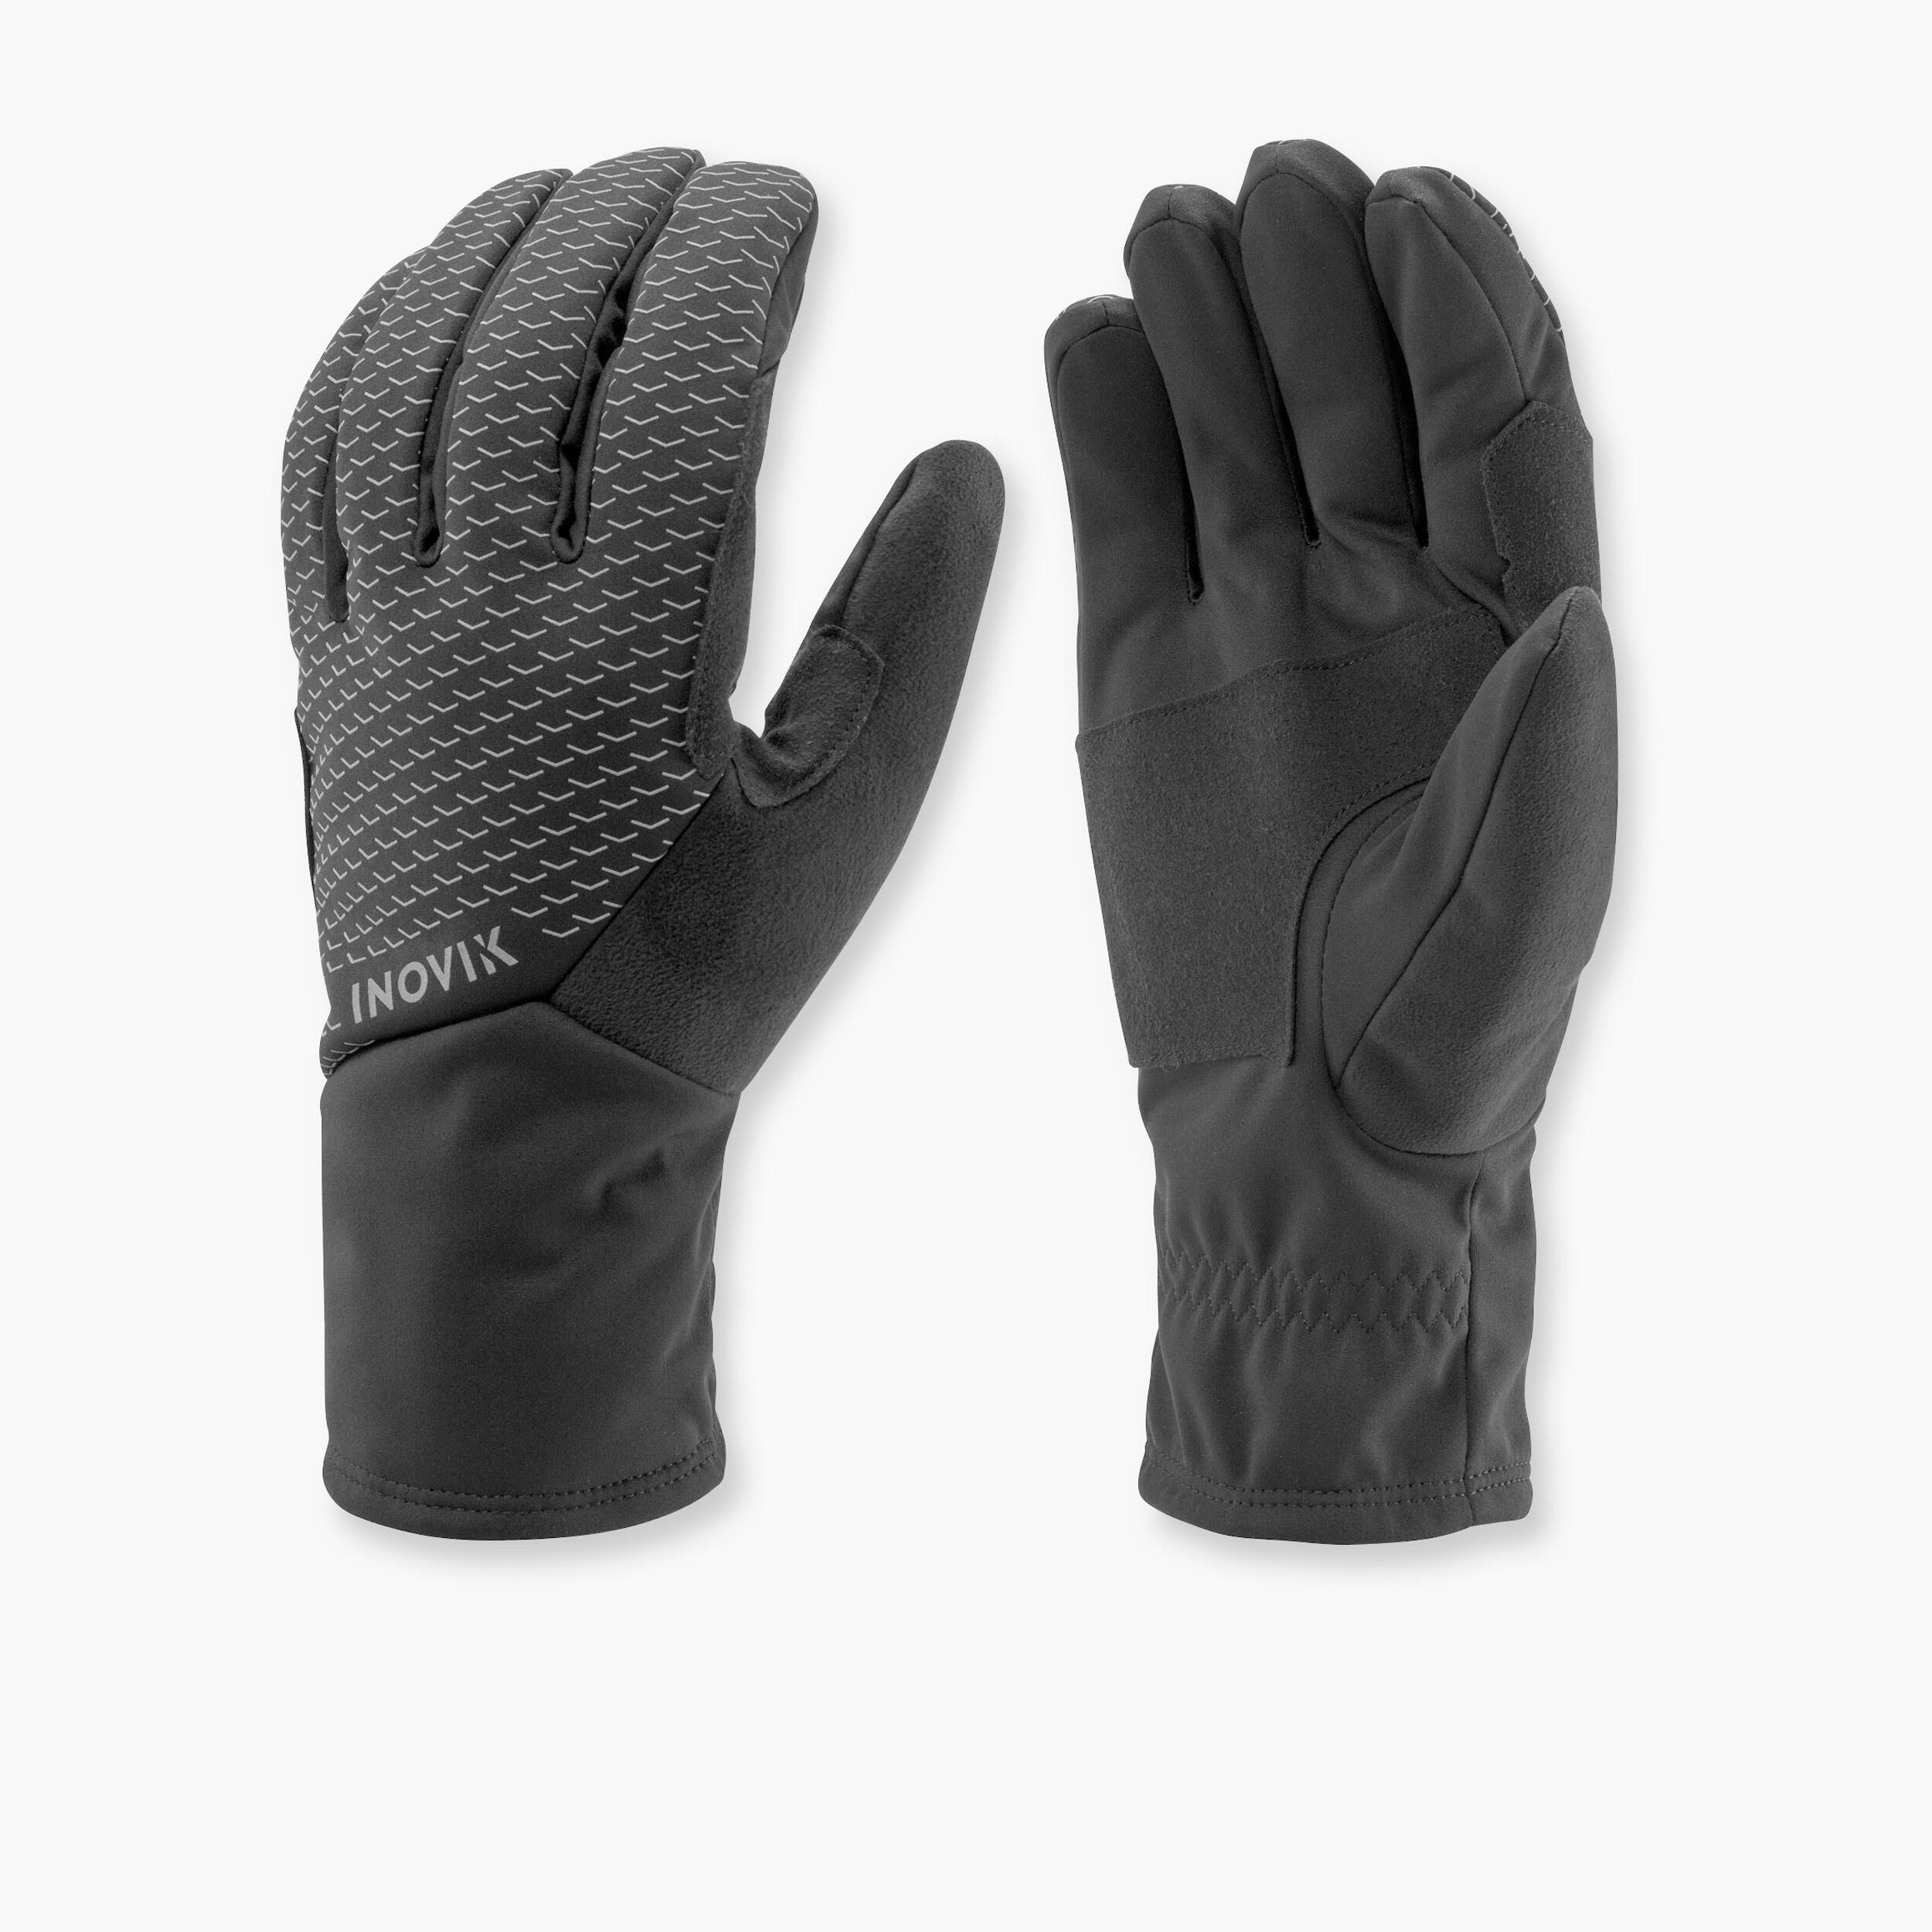 INOVIK Adult Warm Cross-Country Ski Gloves - XC S GLOVES 100 - Black